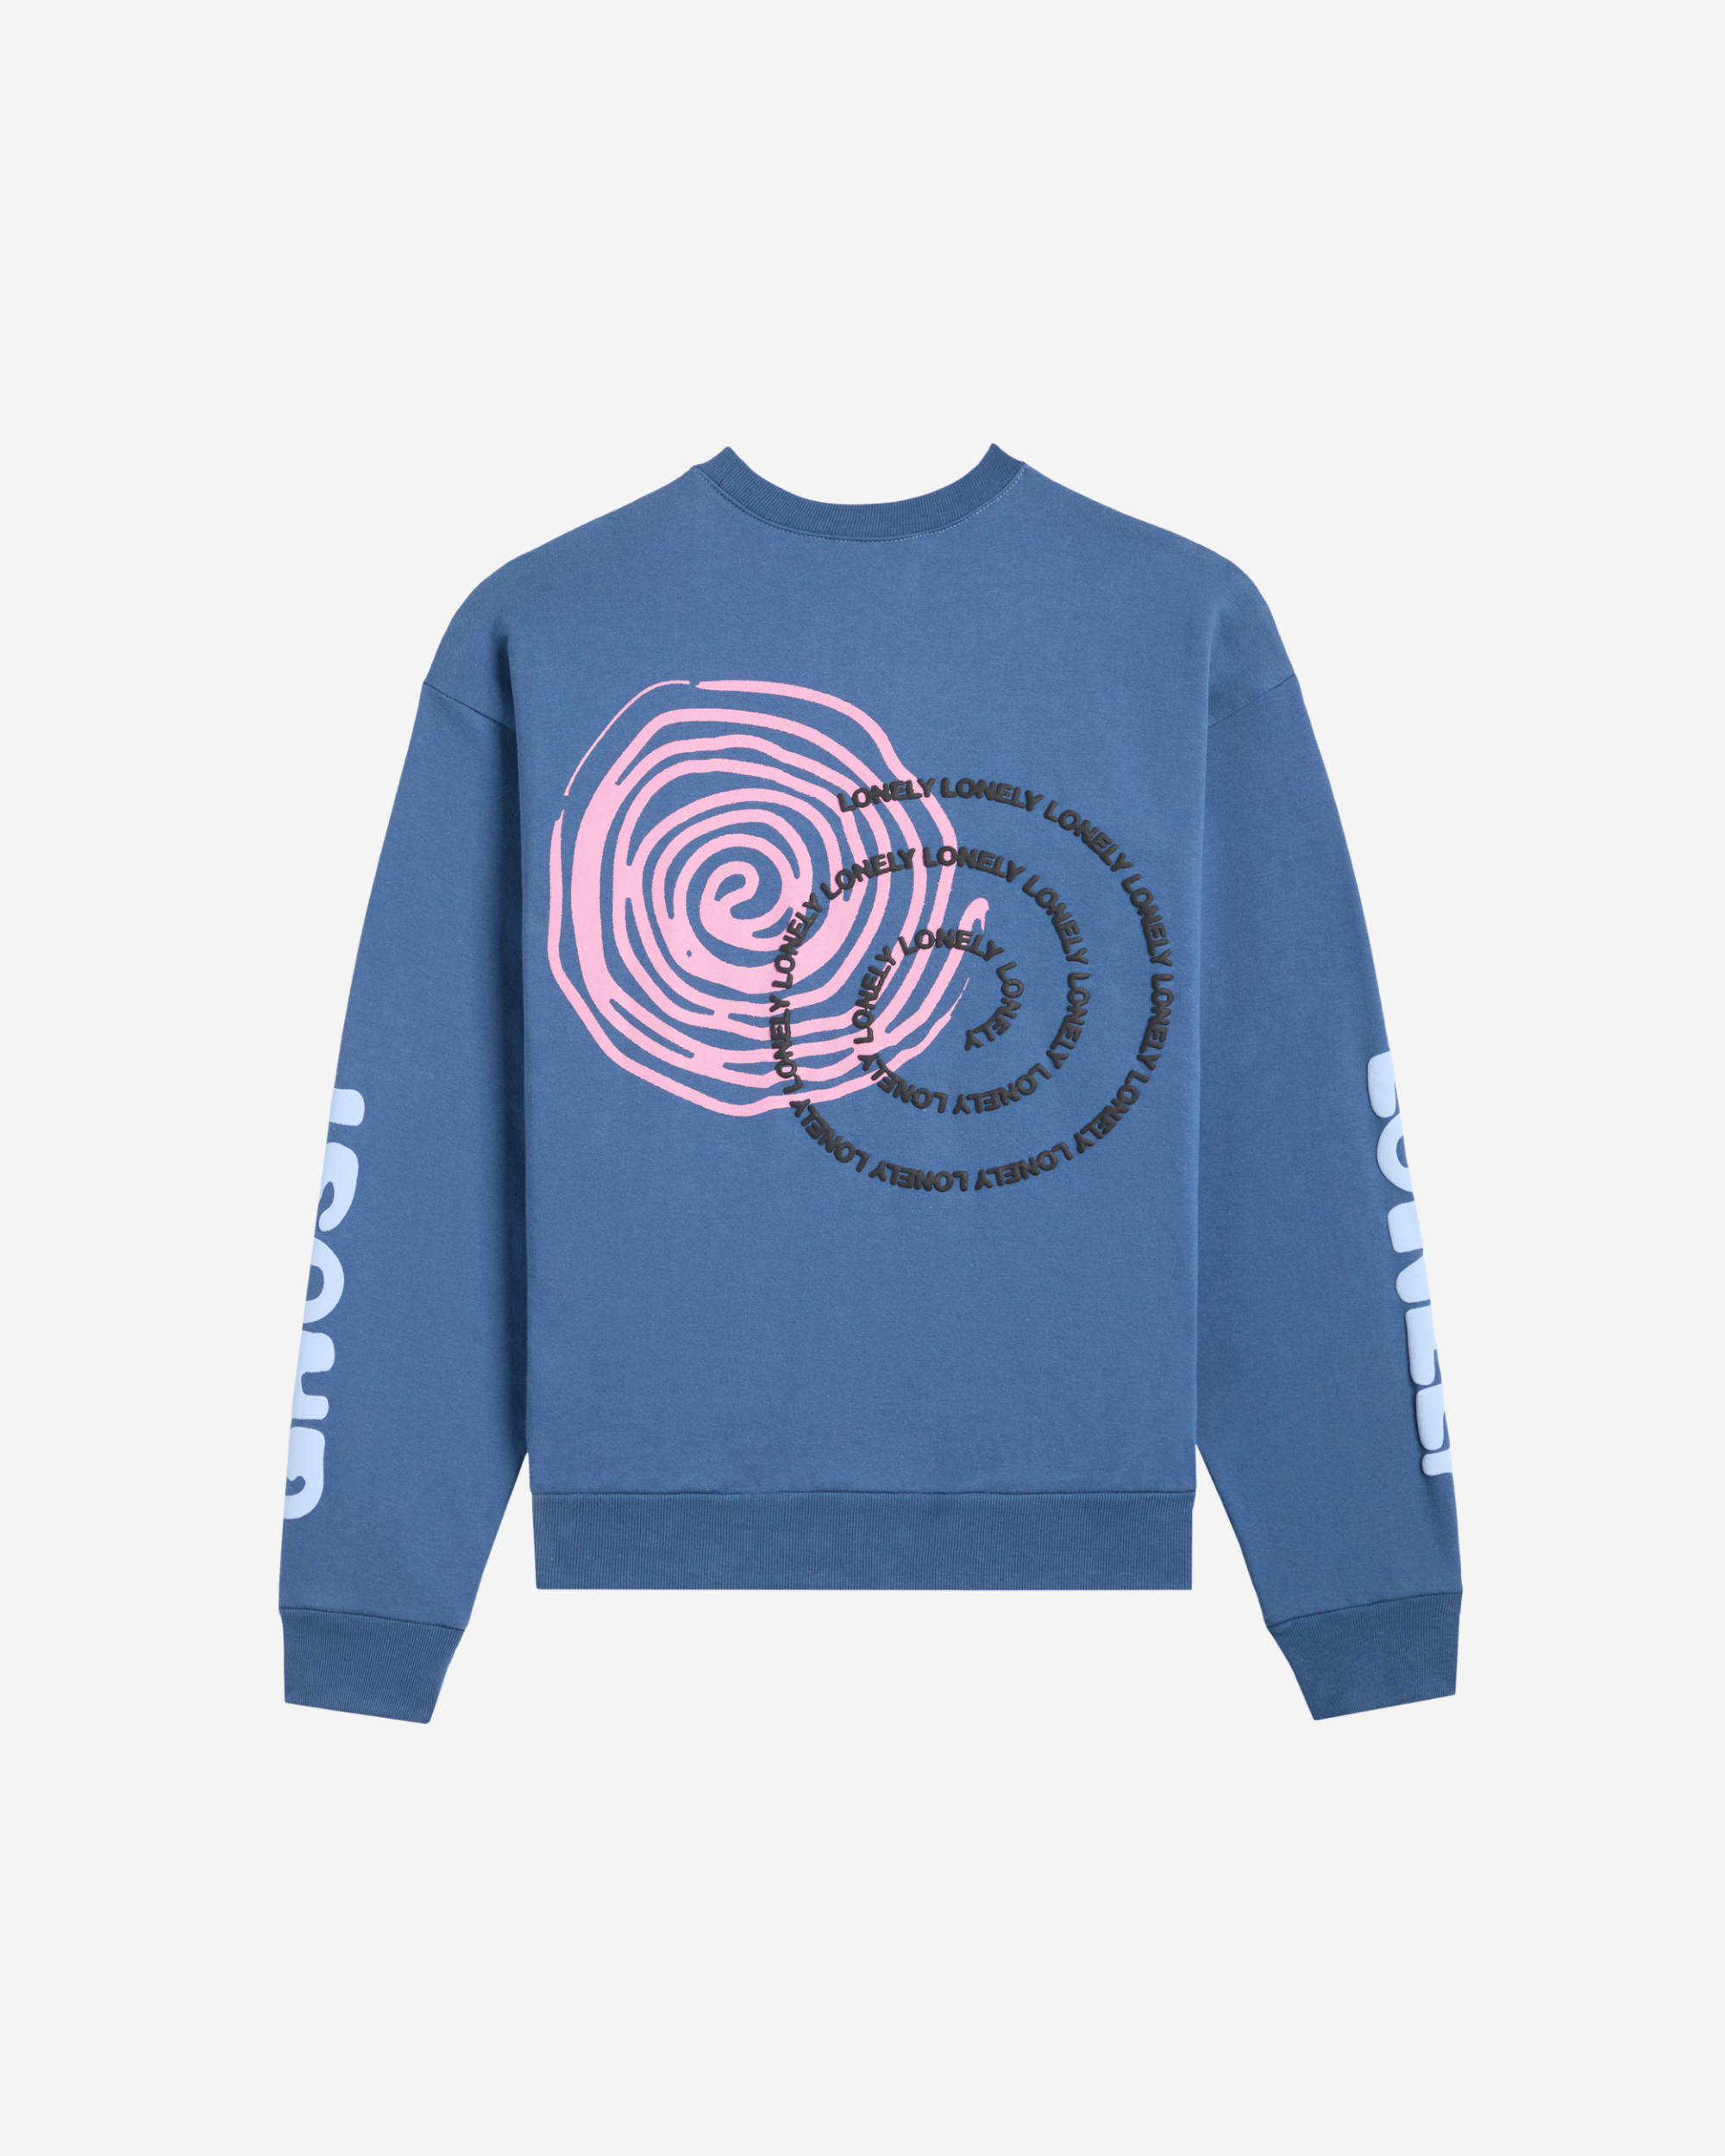 Something to Dream Crewneck Sweater